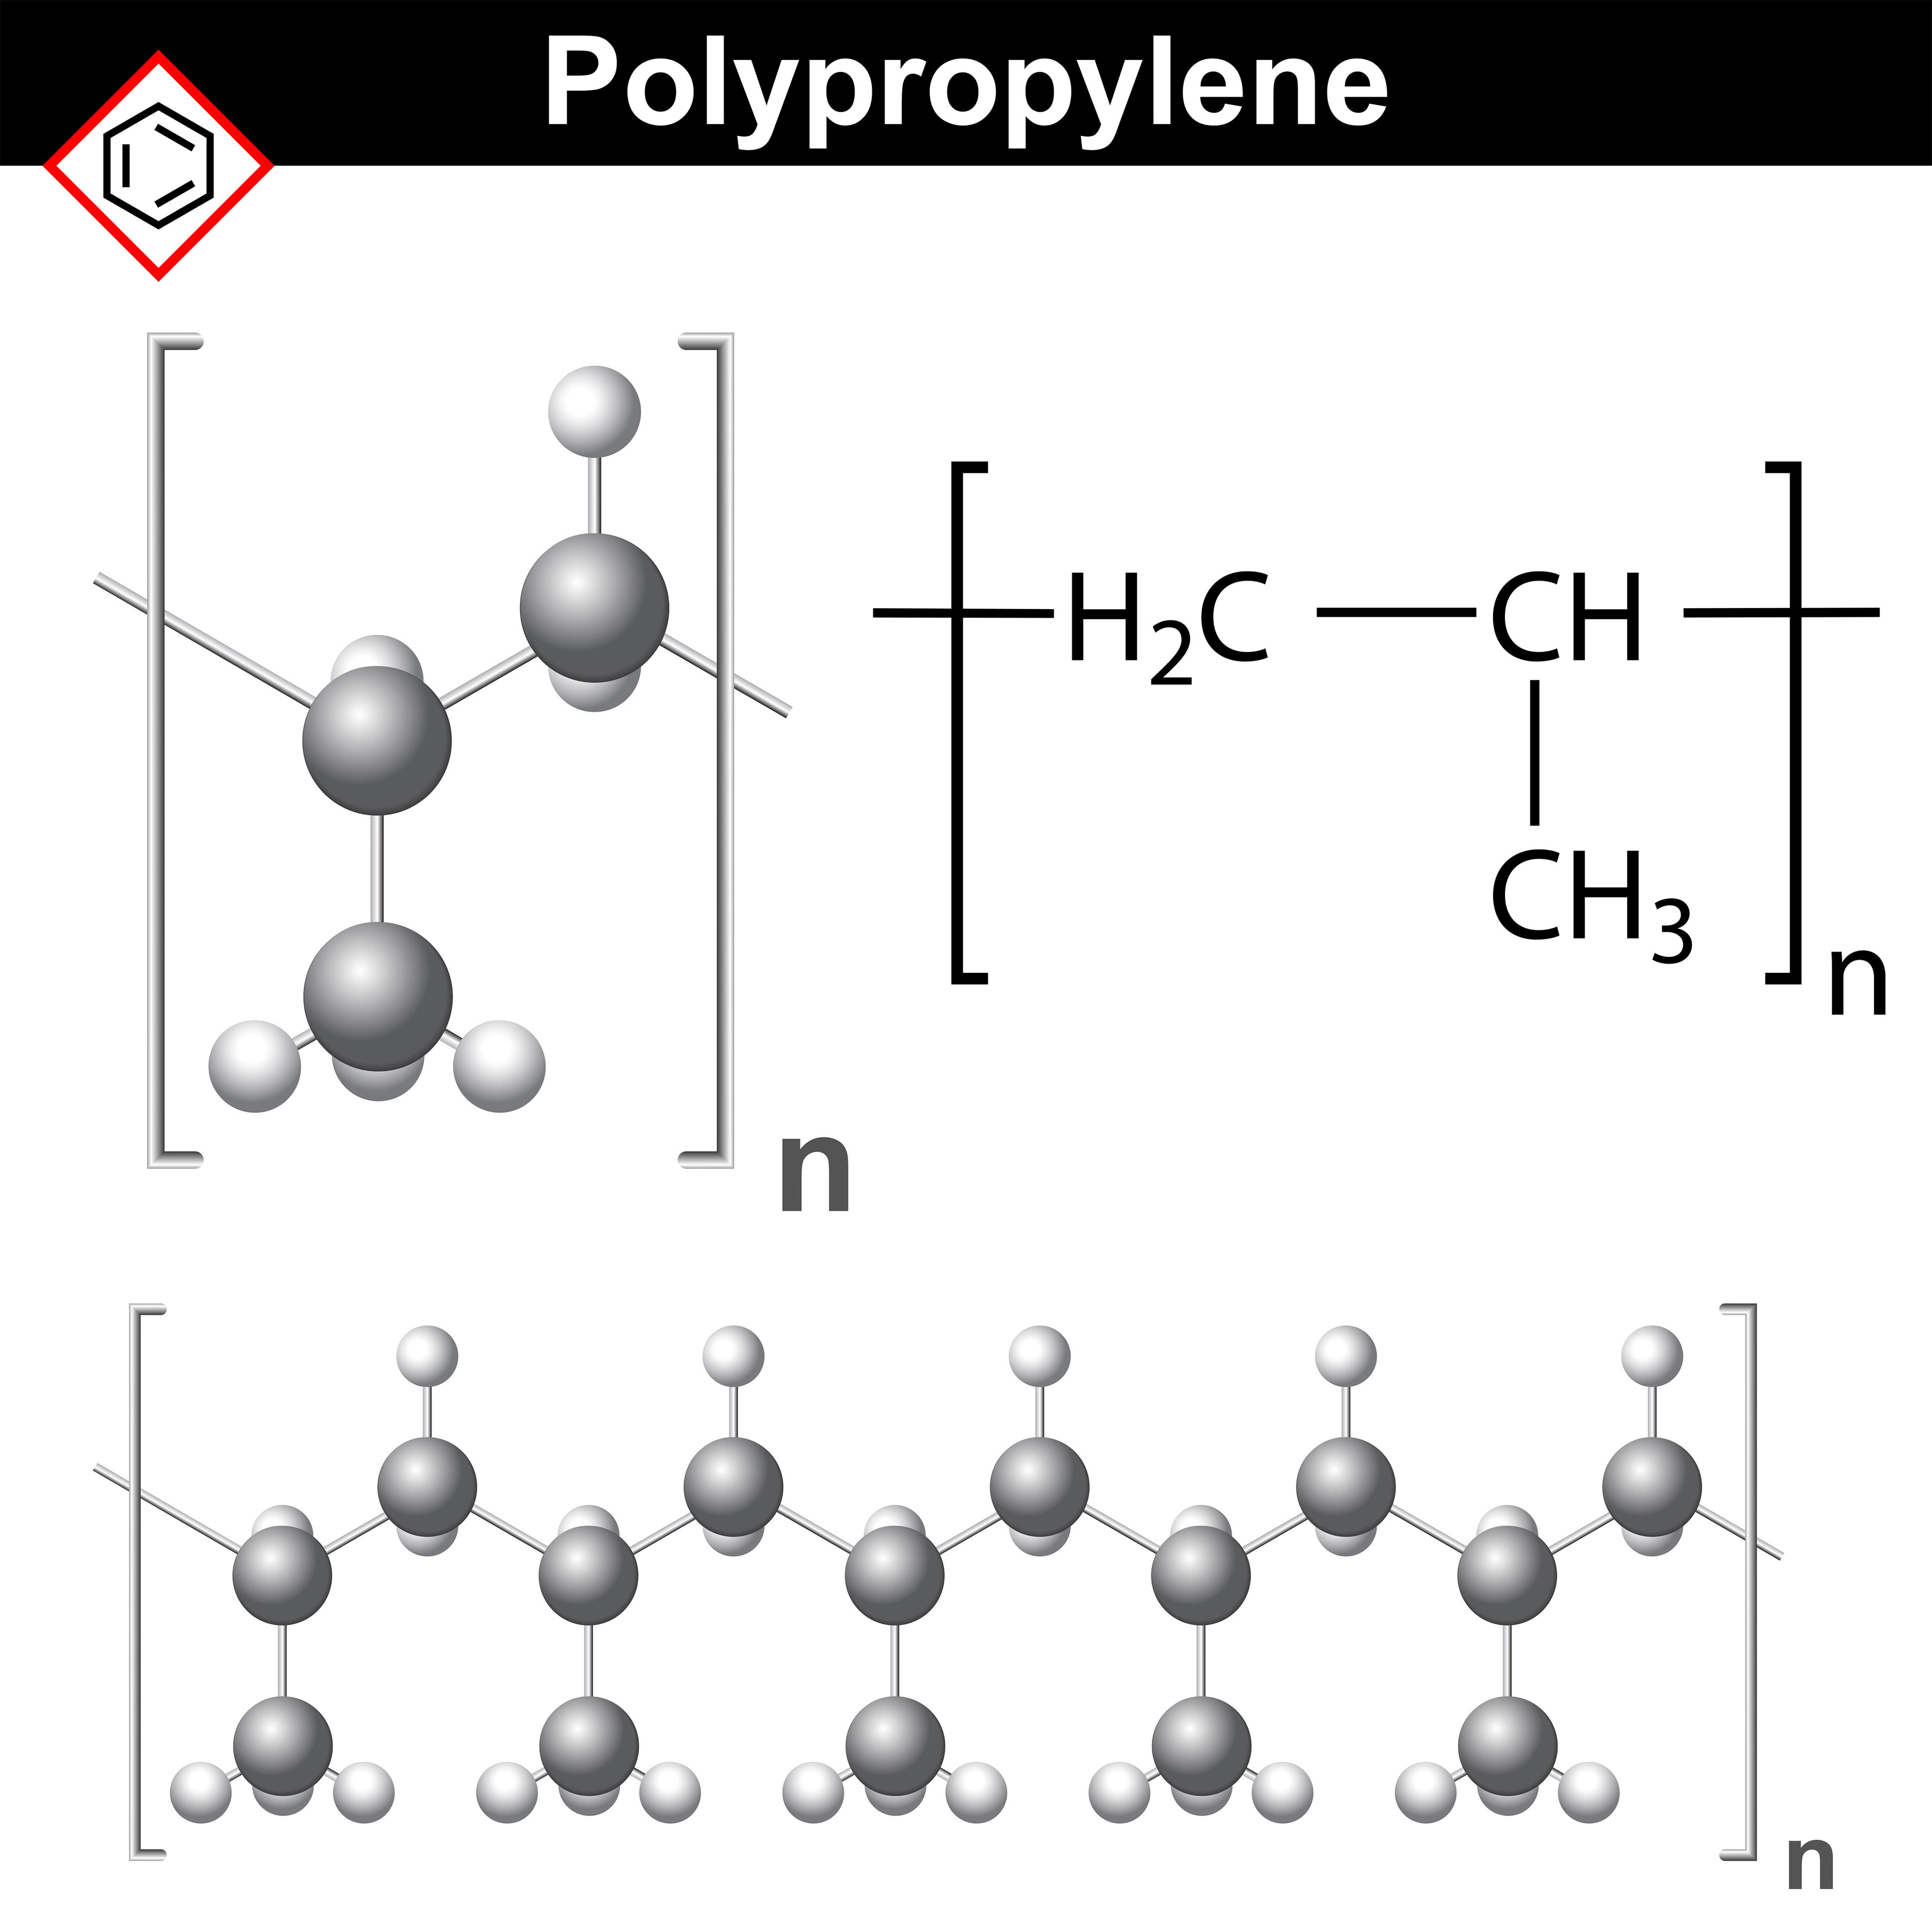 polyethylene chains